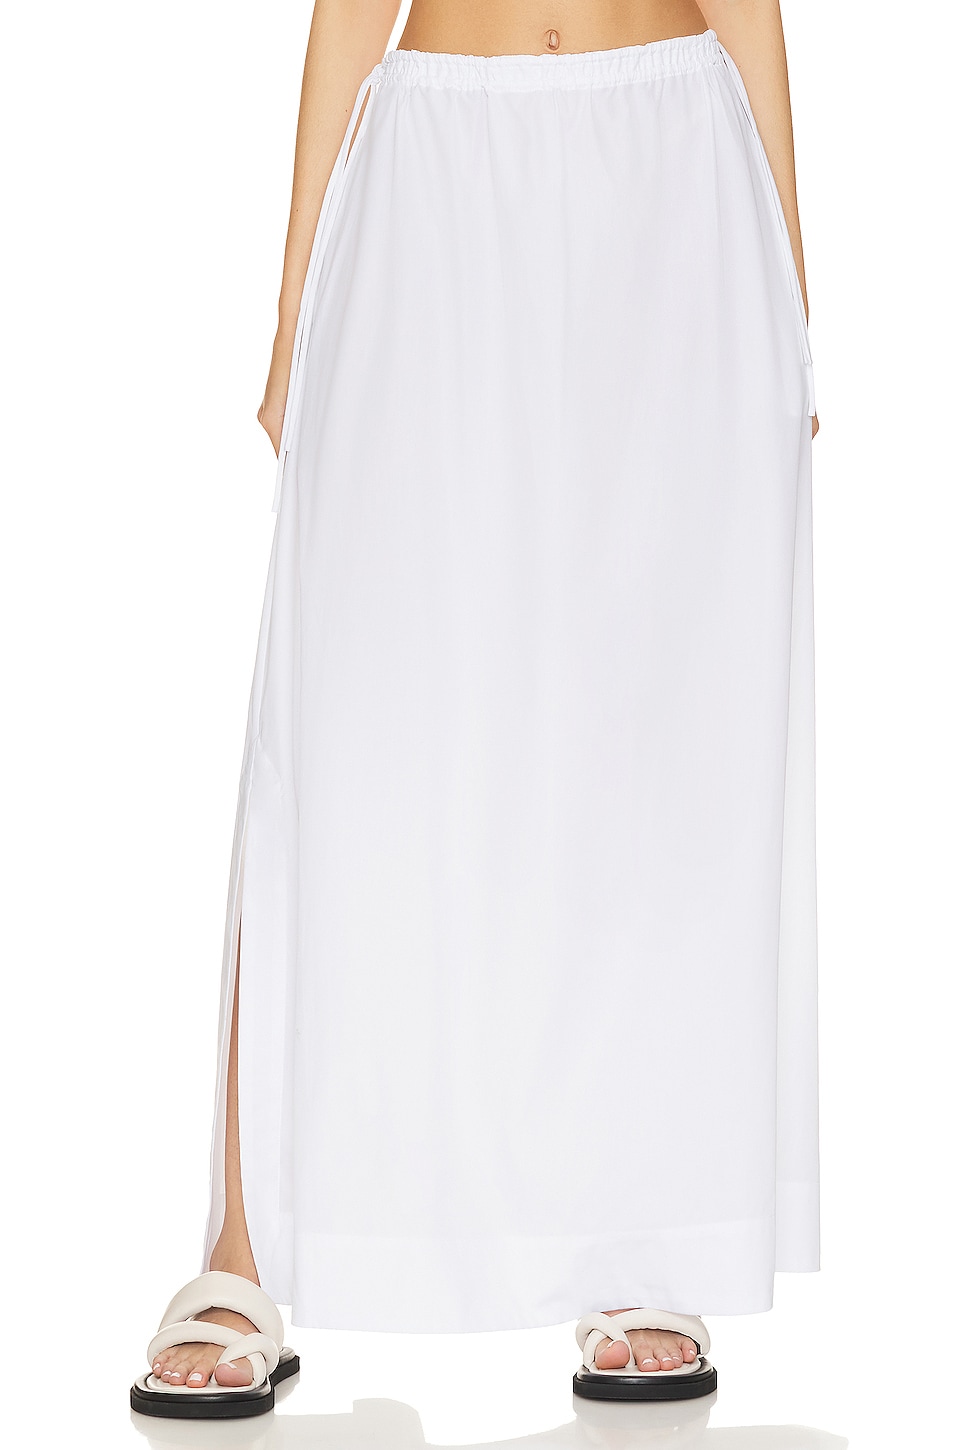 Rag & Bone Soraya Skirt in White | REVOLVE